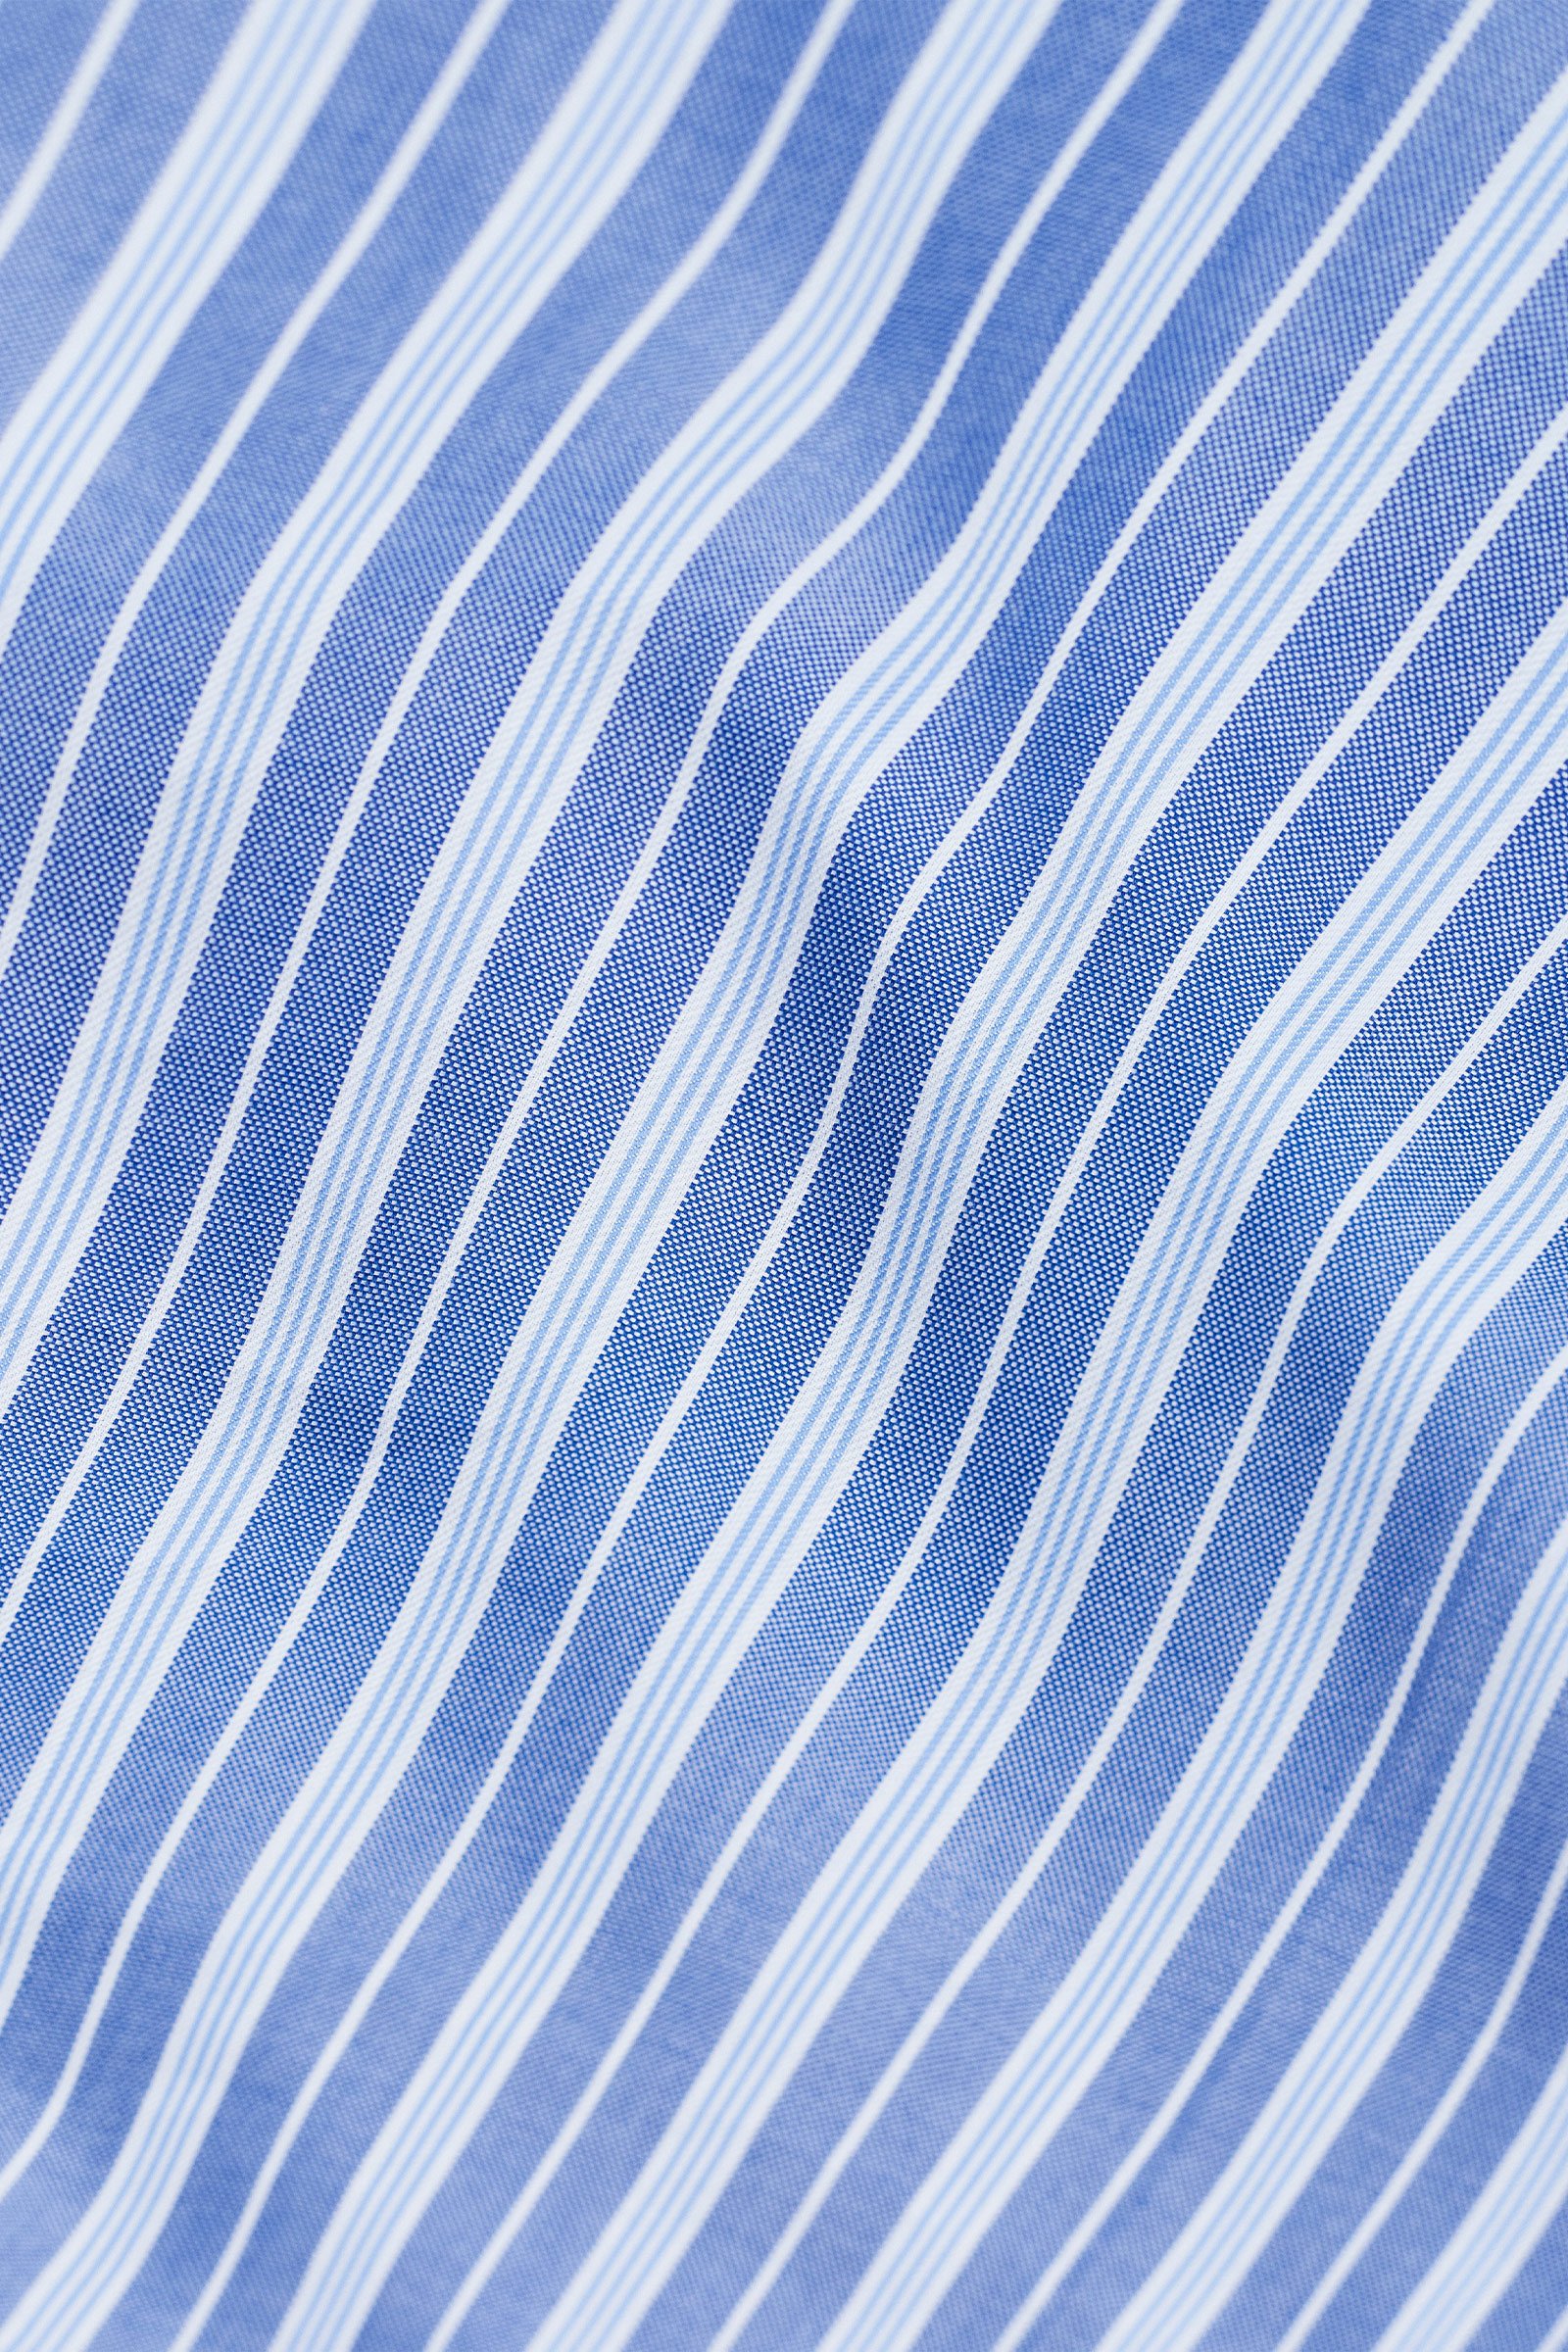 Magniberg Wall Street Duvet Cover Oxford Striped medium blue (0779